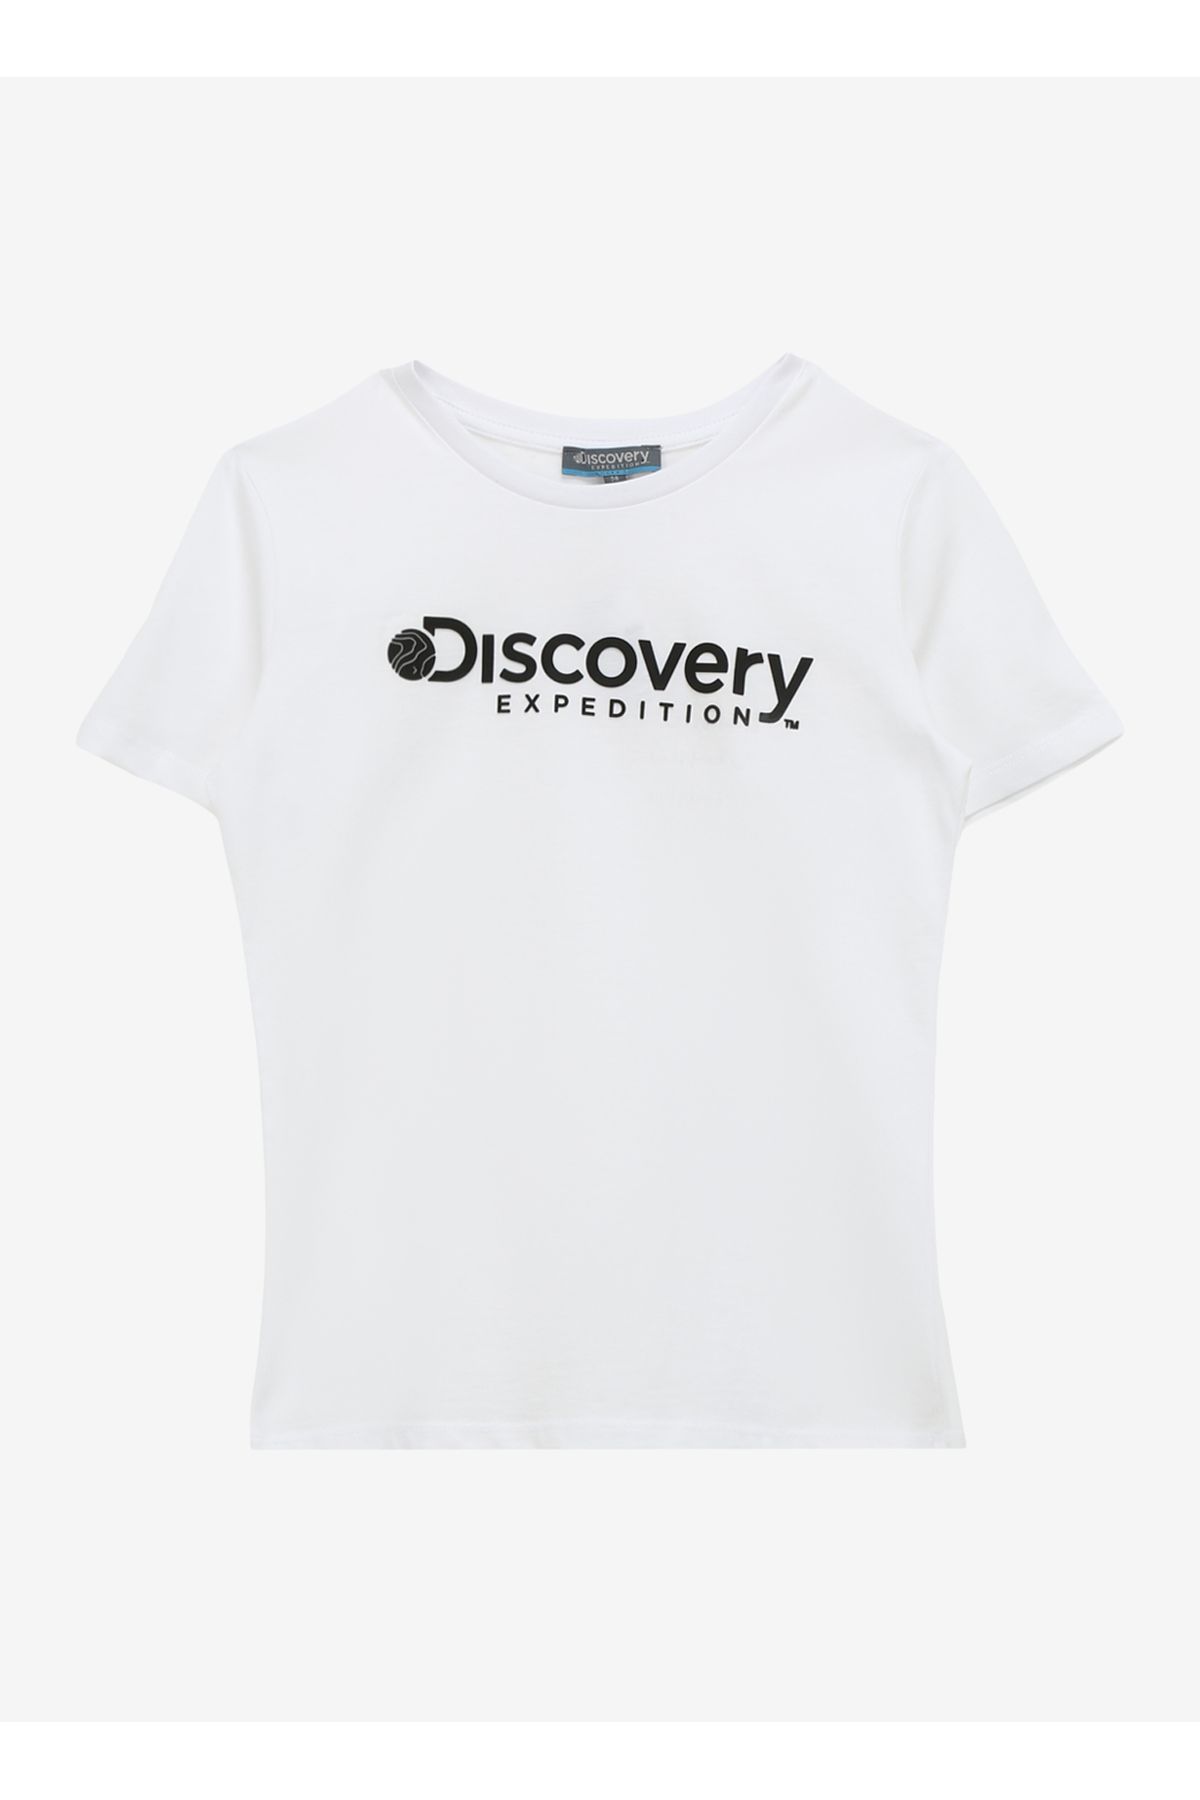 Discovery Expedition Beyaz Kız Çocuk Bisiklet Yaka Baskılı T-shirt Rogers Gırl